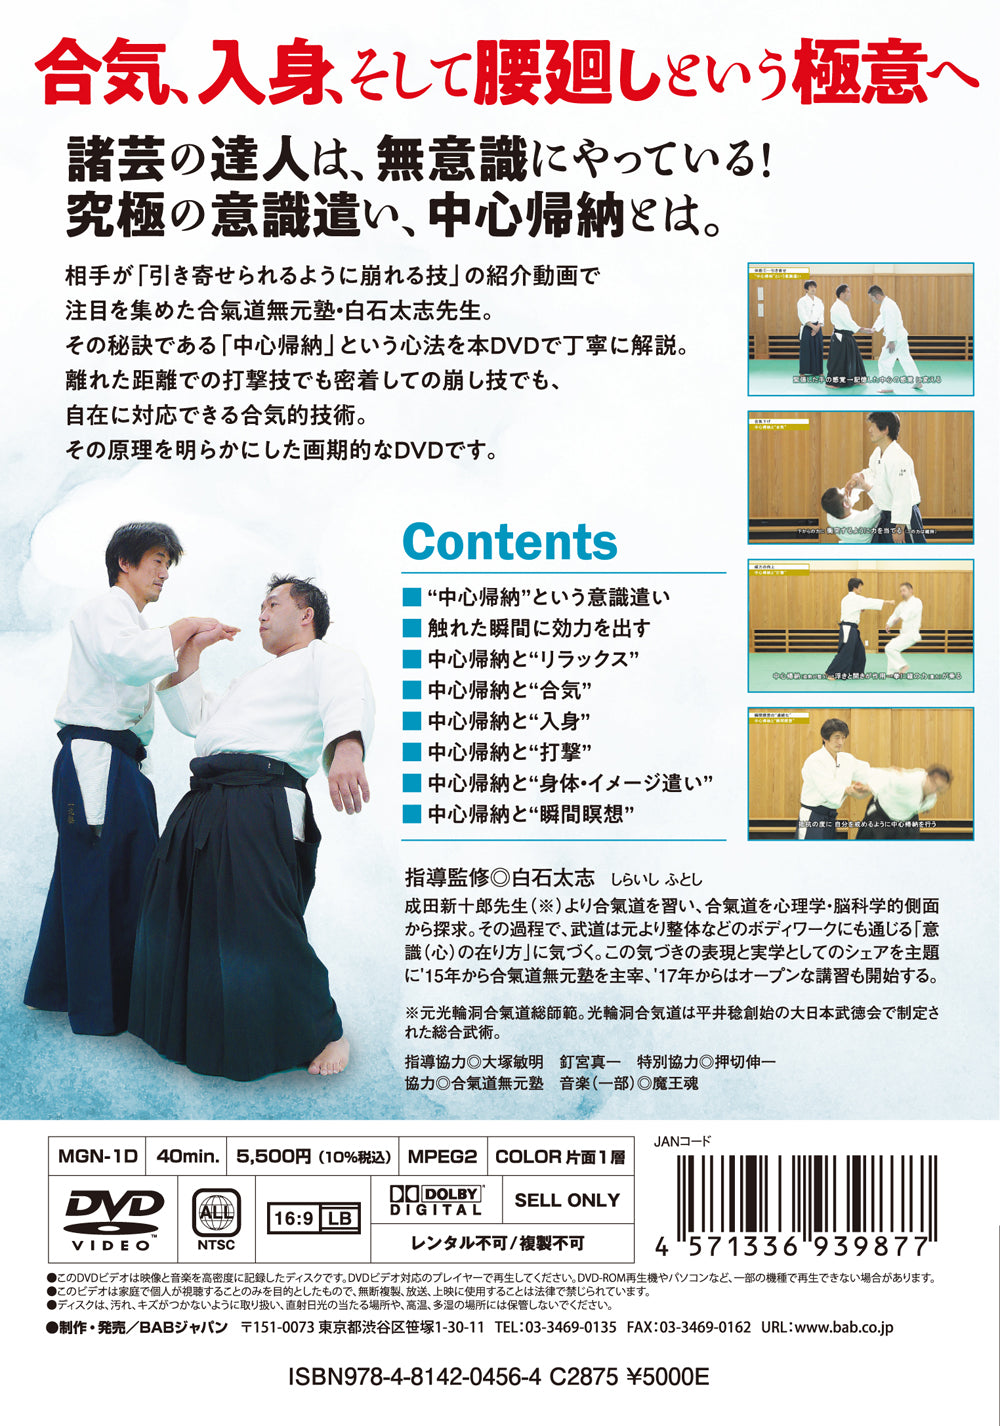 Secret of Mind Method in Aikido DVD by Futoshi Shiraishi